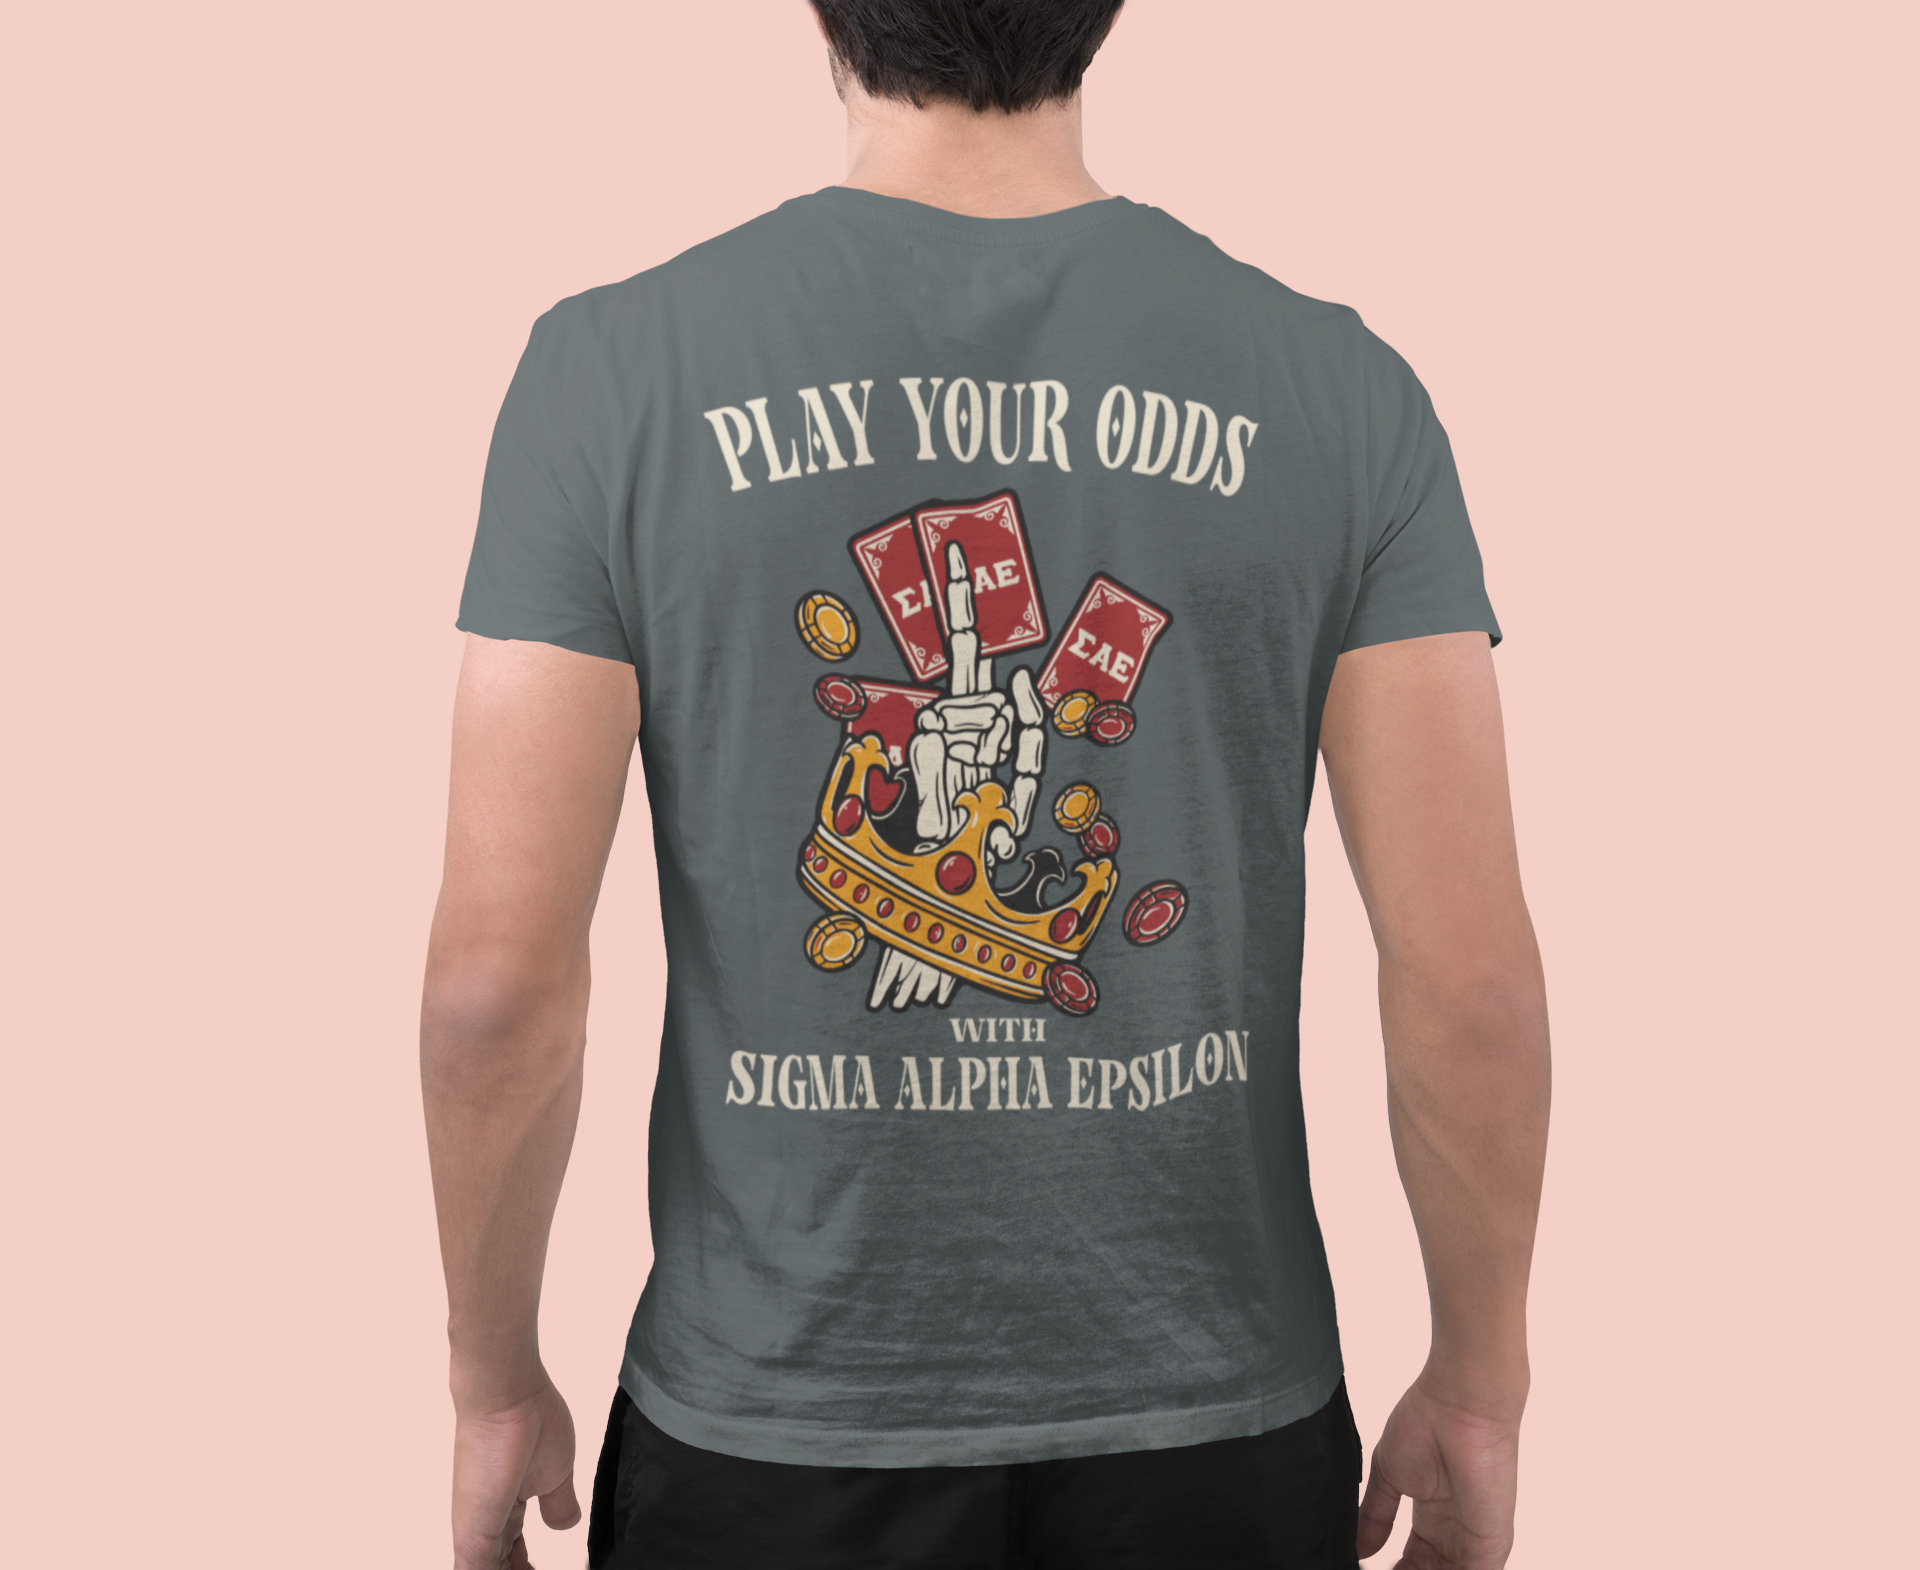 Grey Sigma Alpha Epsilon Graphic T-Shirt | Play Your Odds | Sigma Alpha Epsilon Clothing and Merchandise